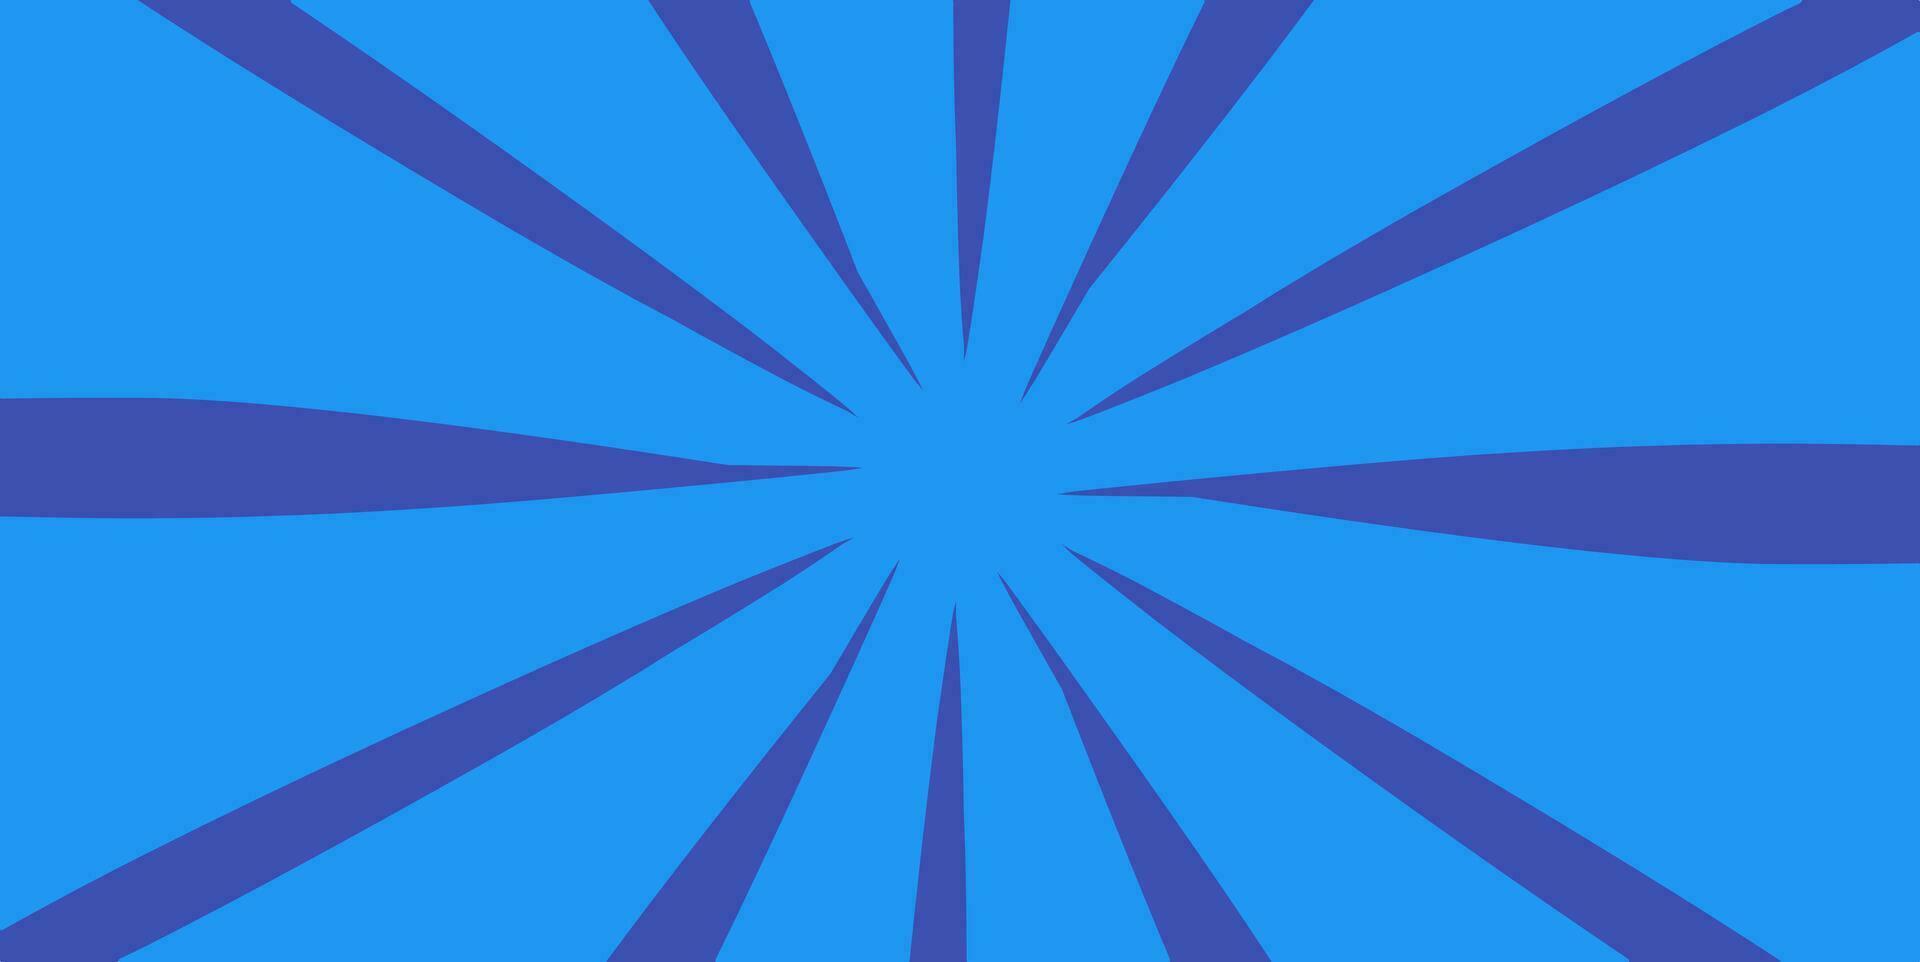 bakgrund illustration med blå rader vektor